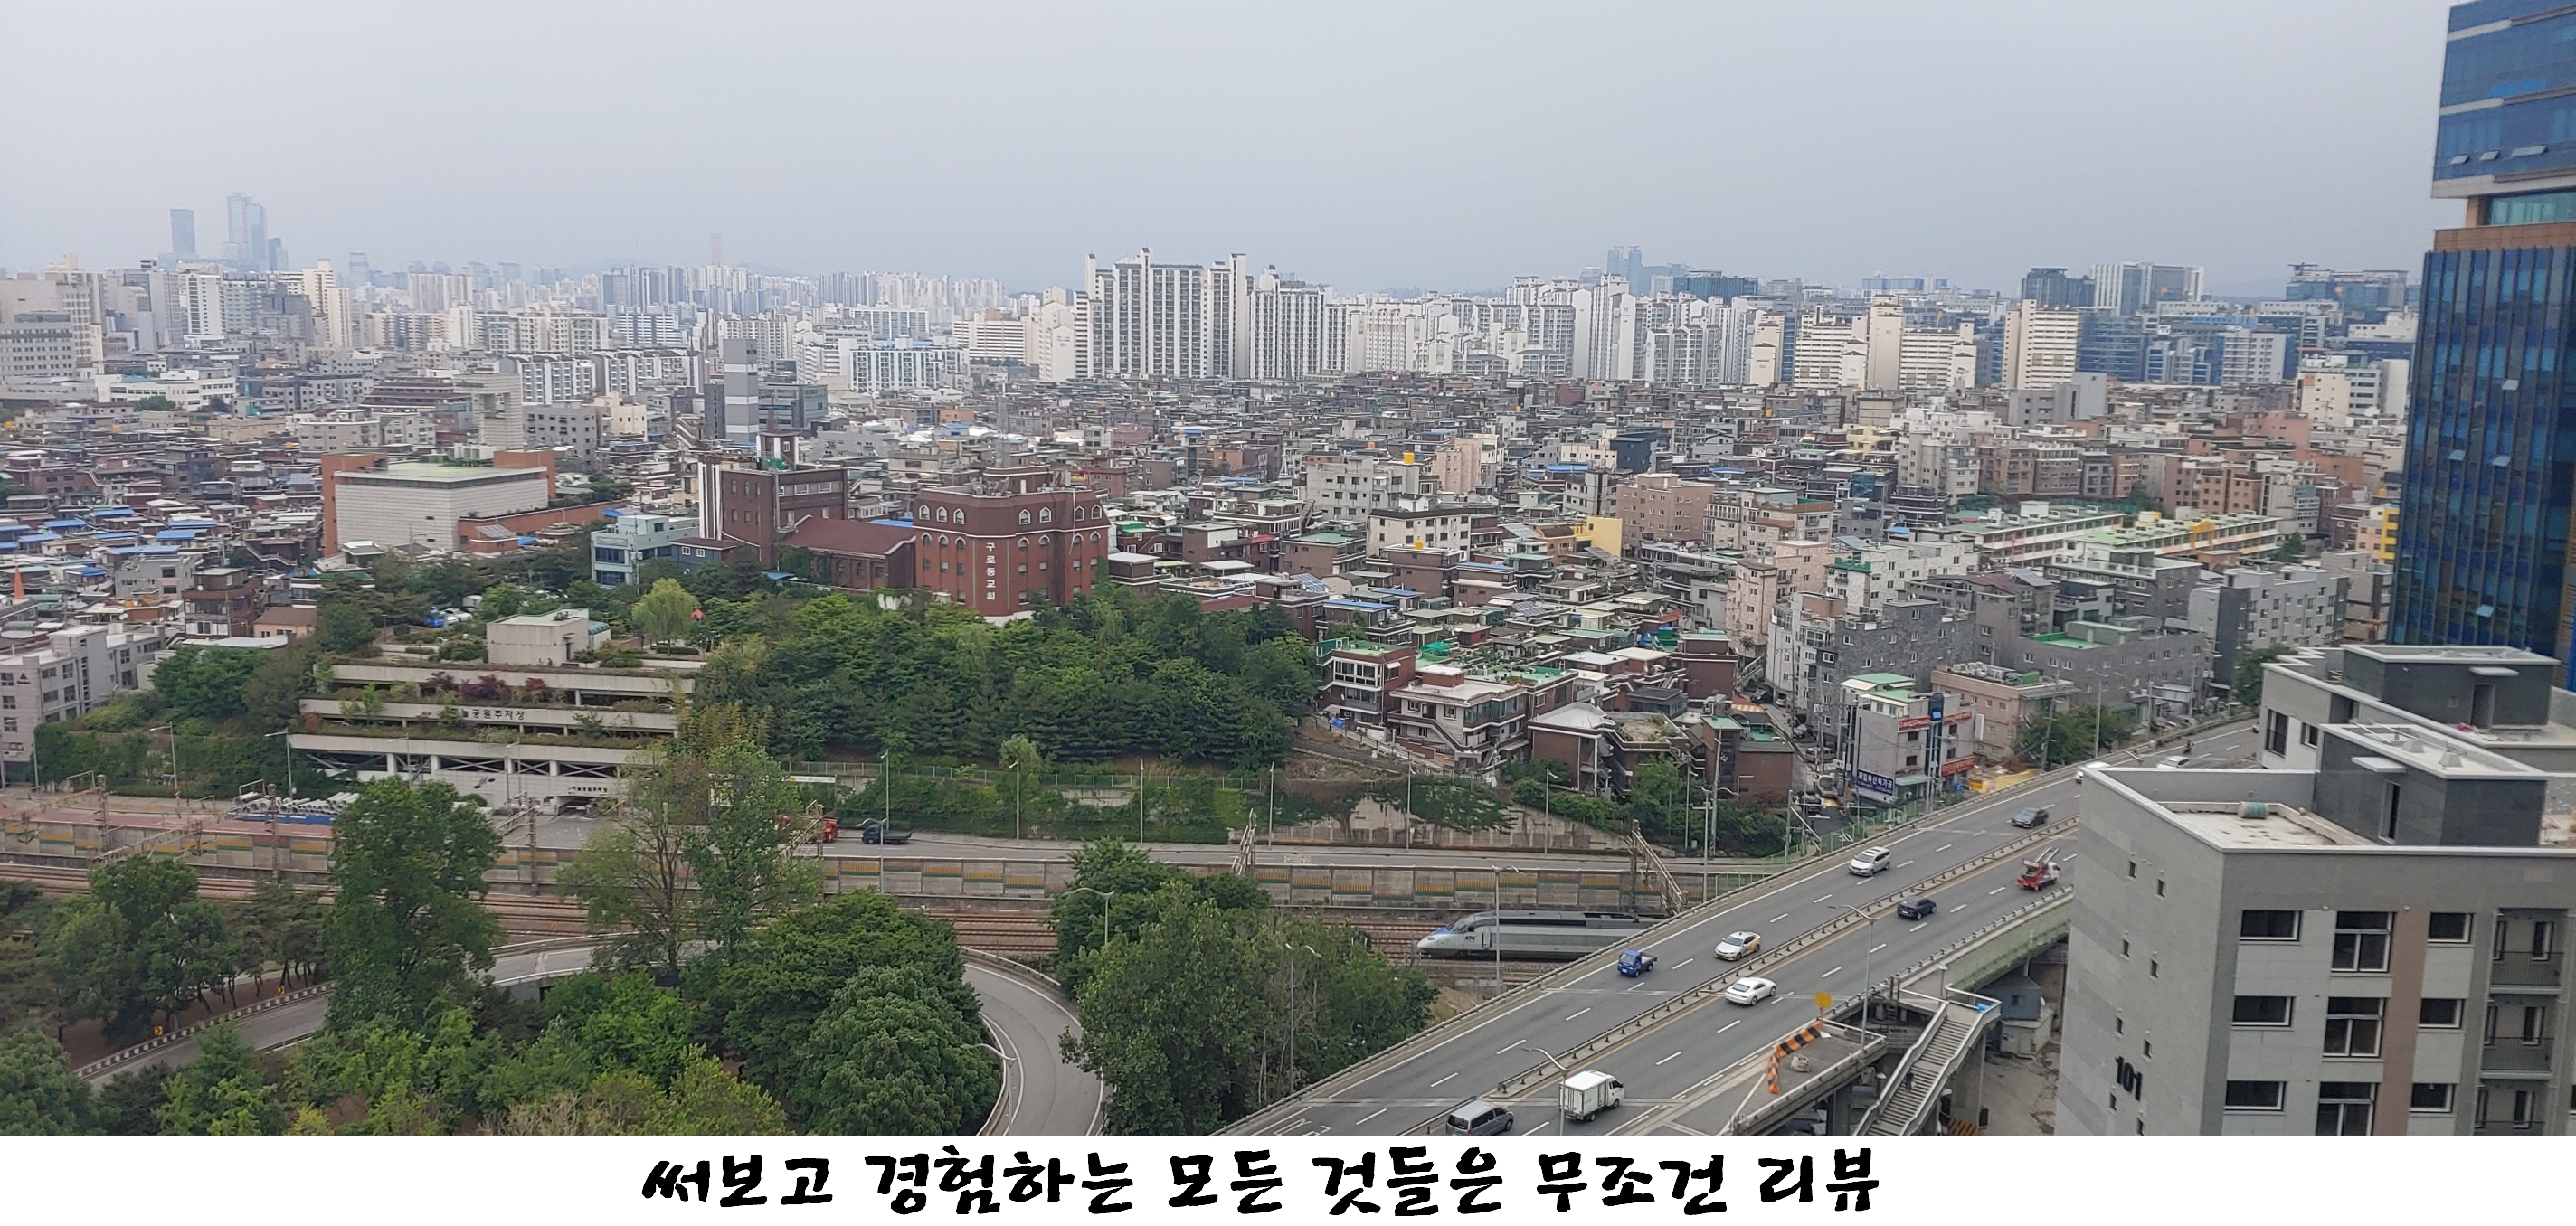 220530&#44; Seoul&#44; 사진&#44; 서울&#44; 풍경&#44; 하늘